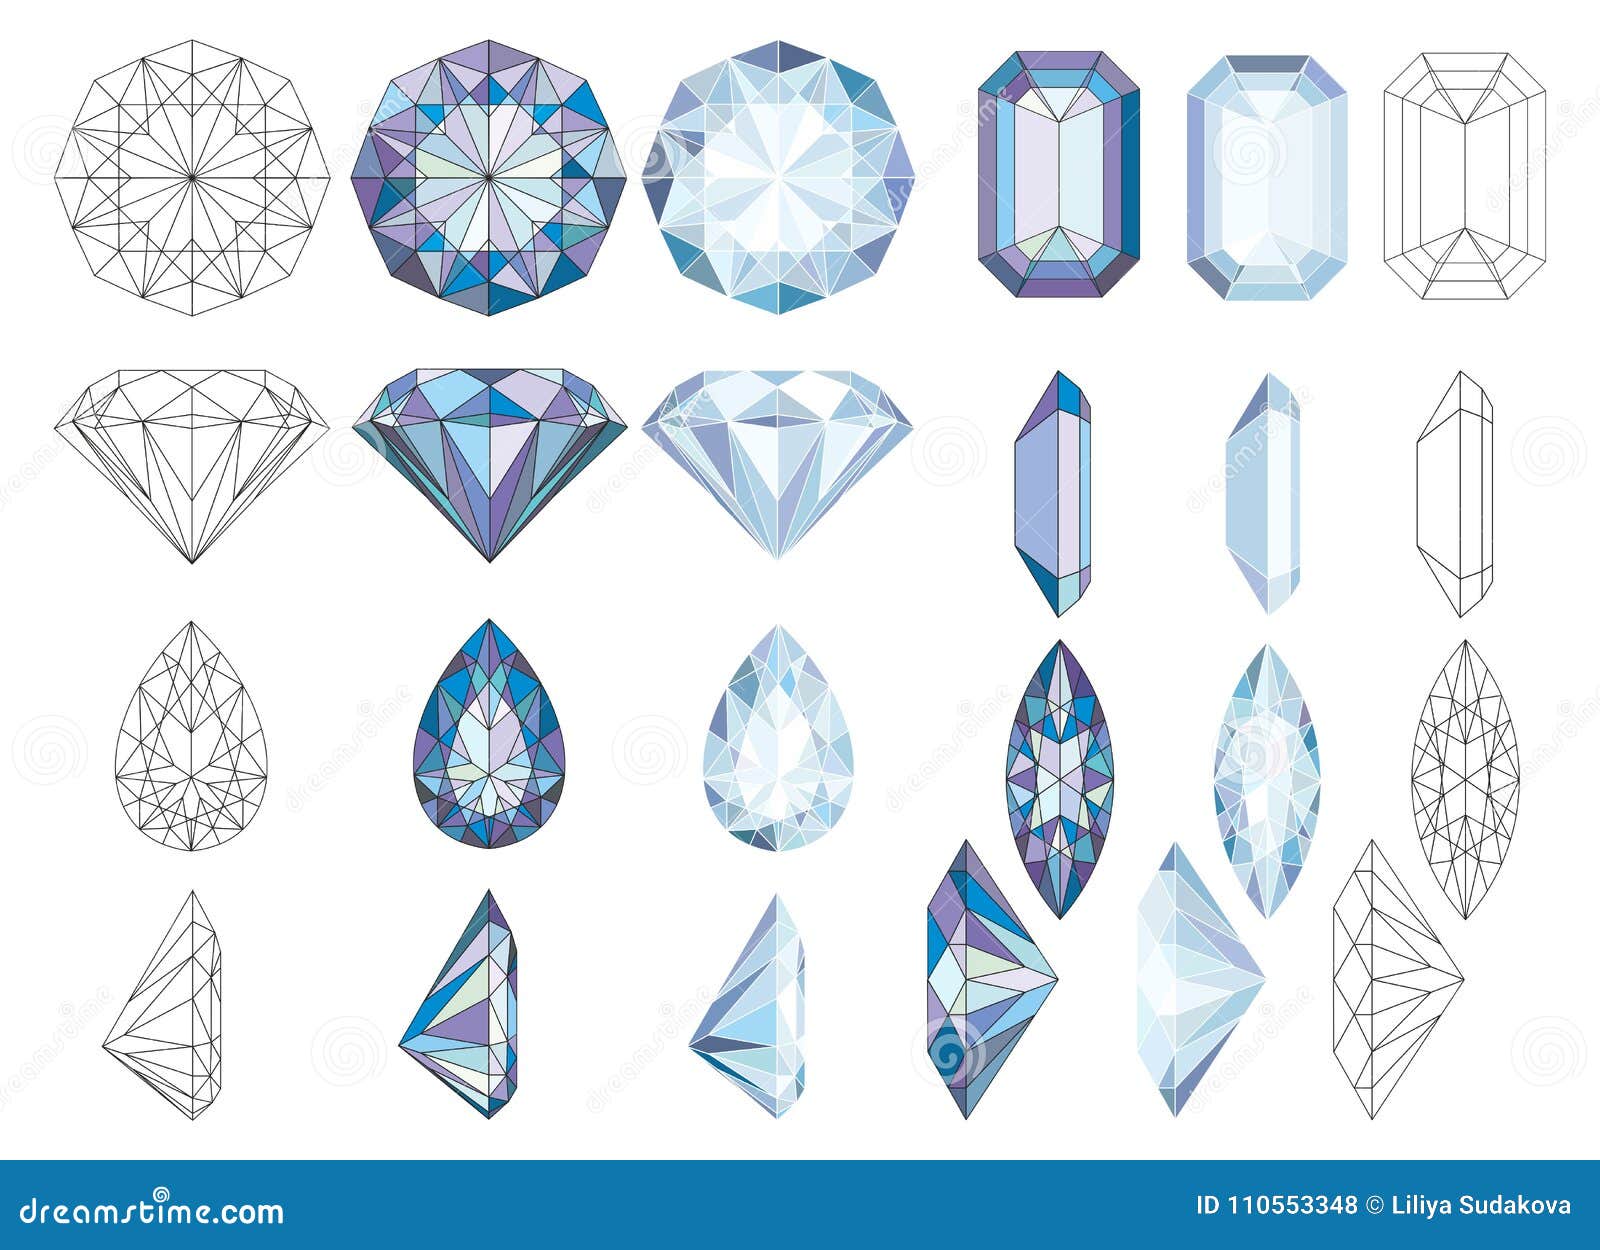 purpule diamond crystals  clip art